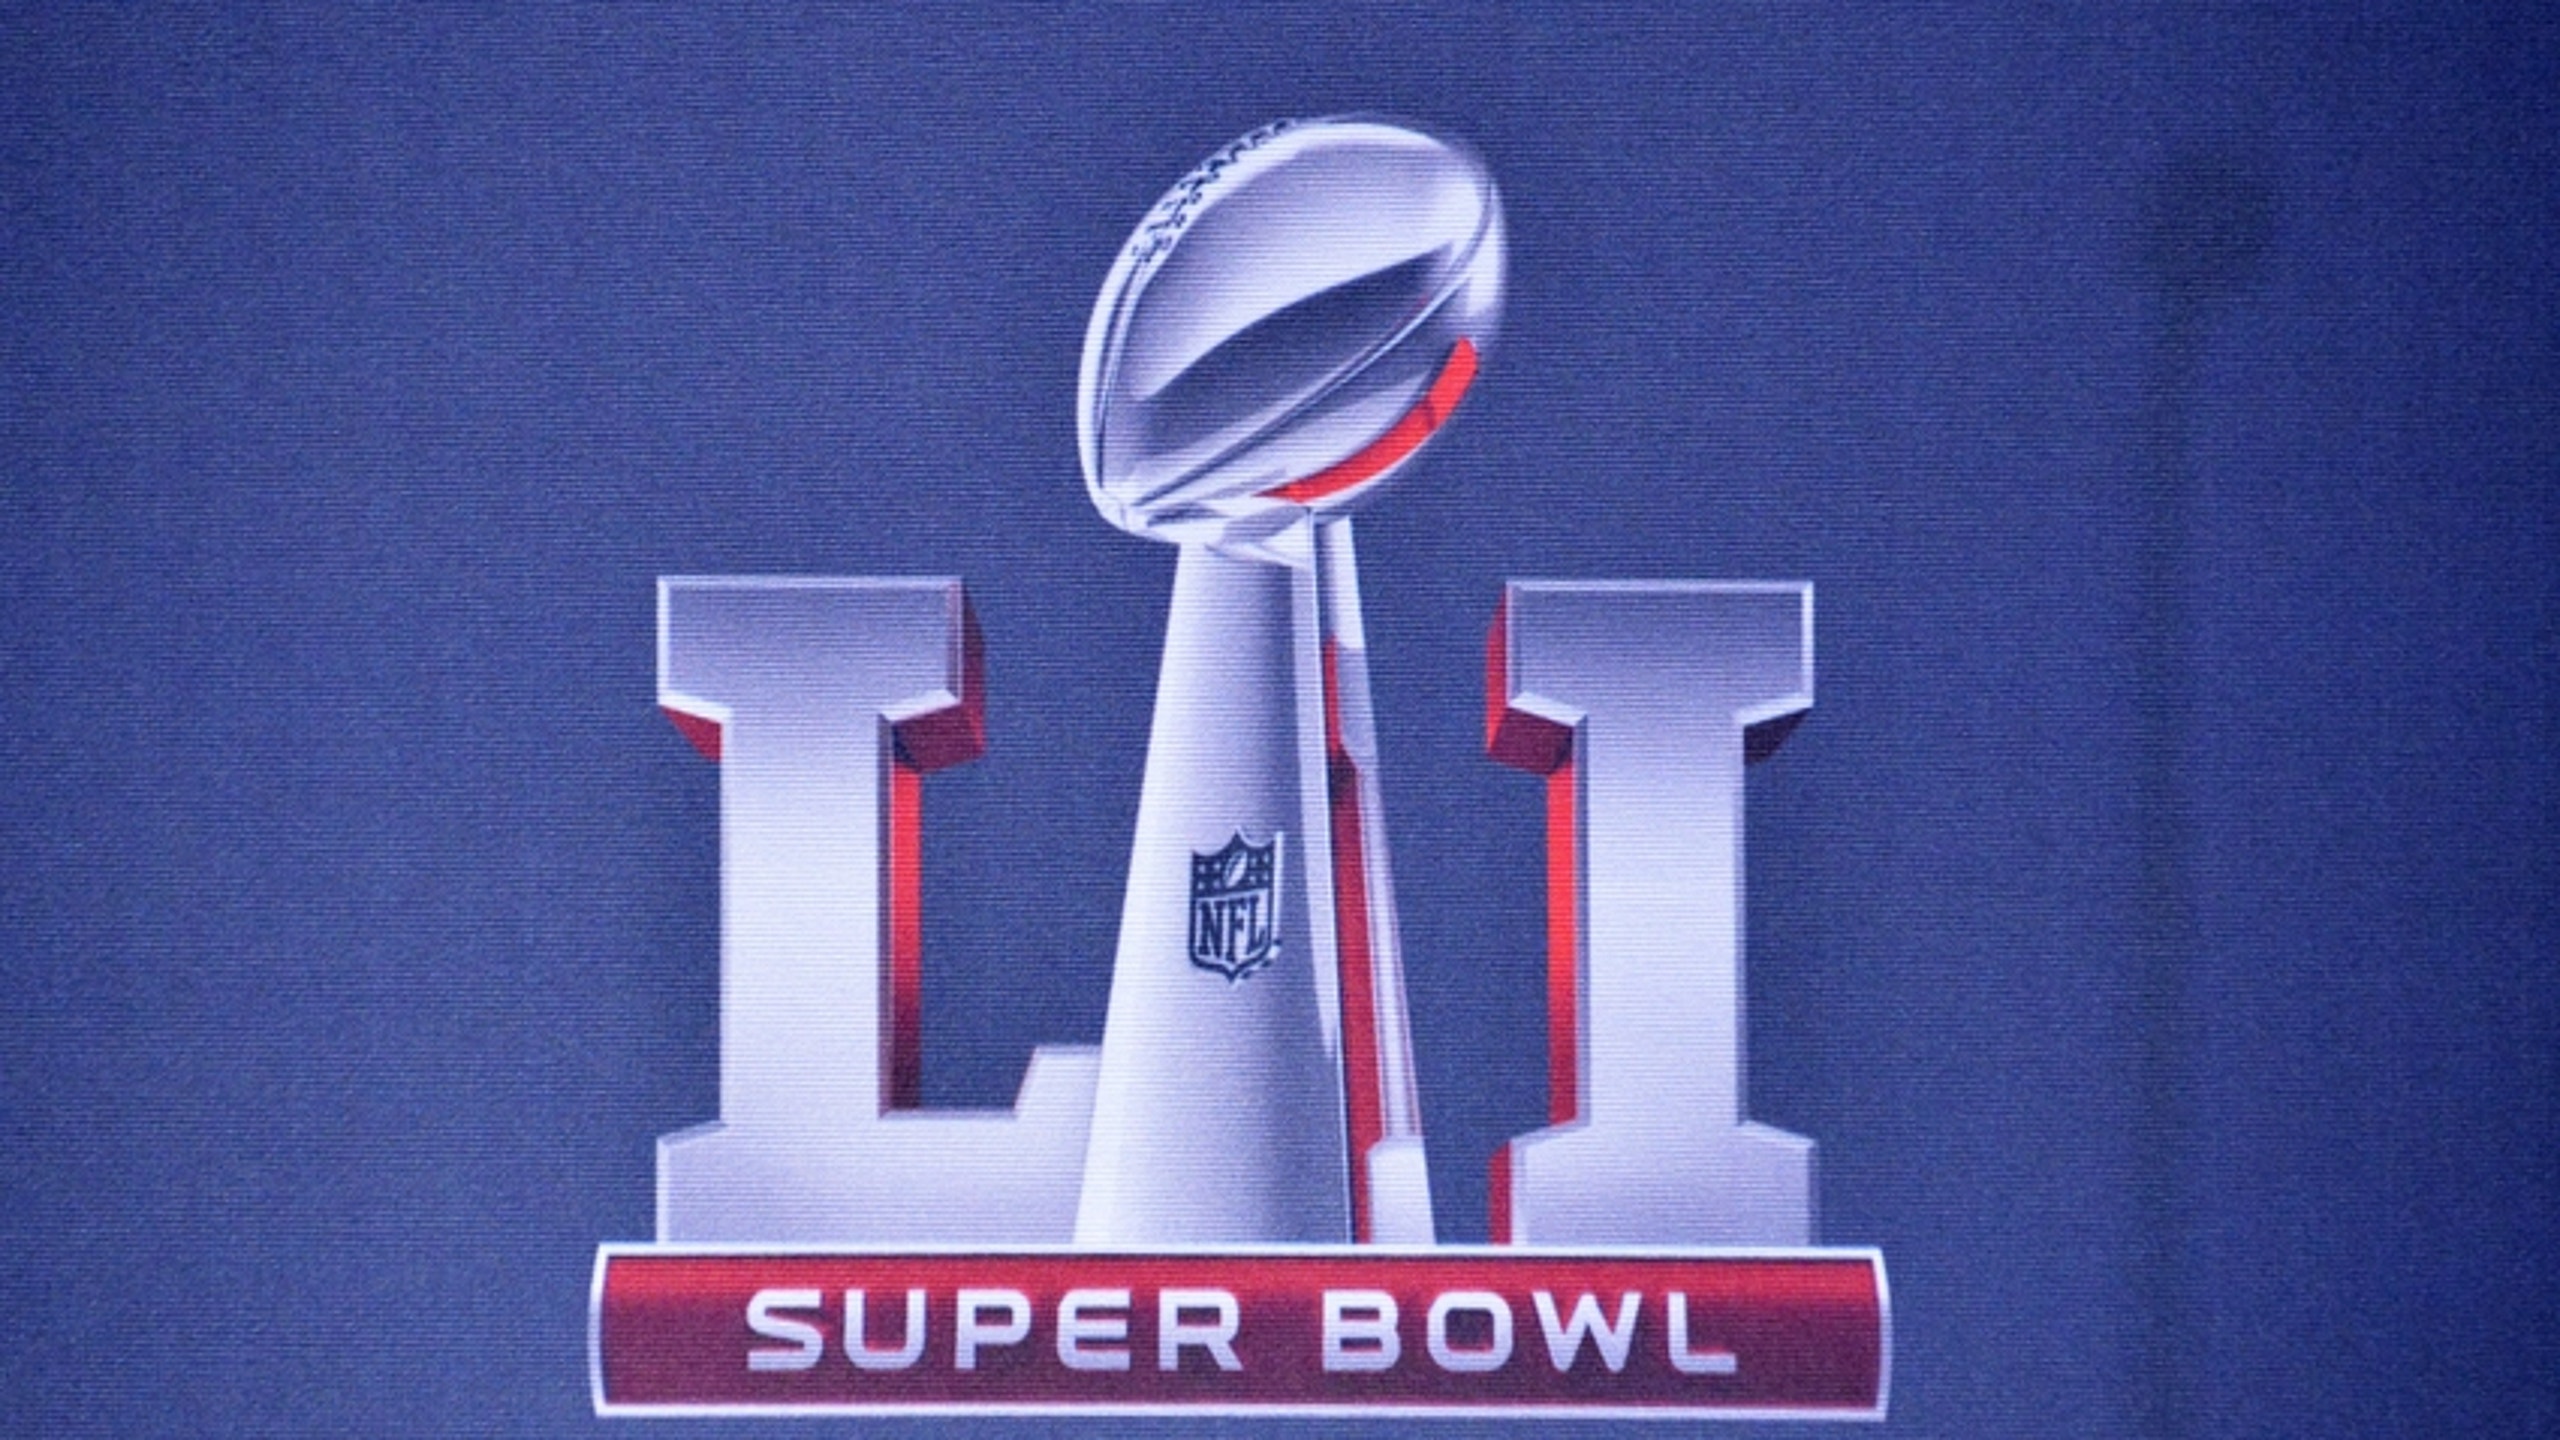 Super Bowl logos Power ranking 301 FOX Sports